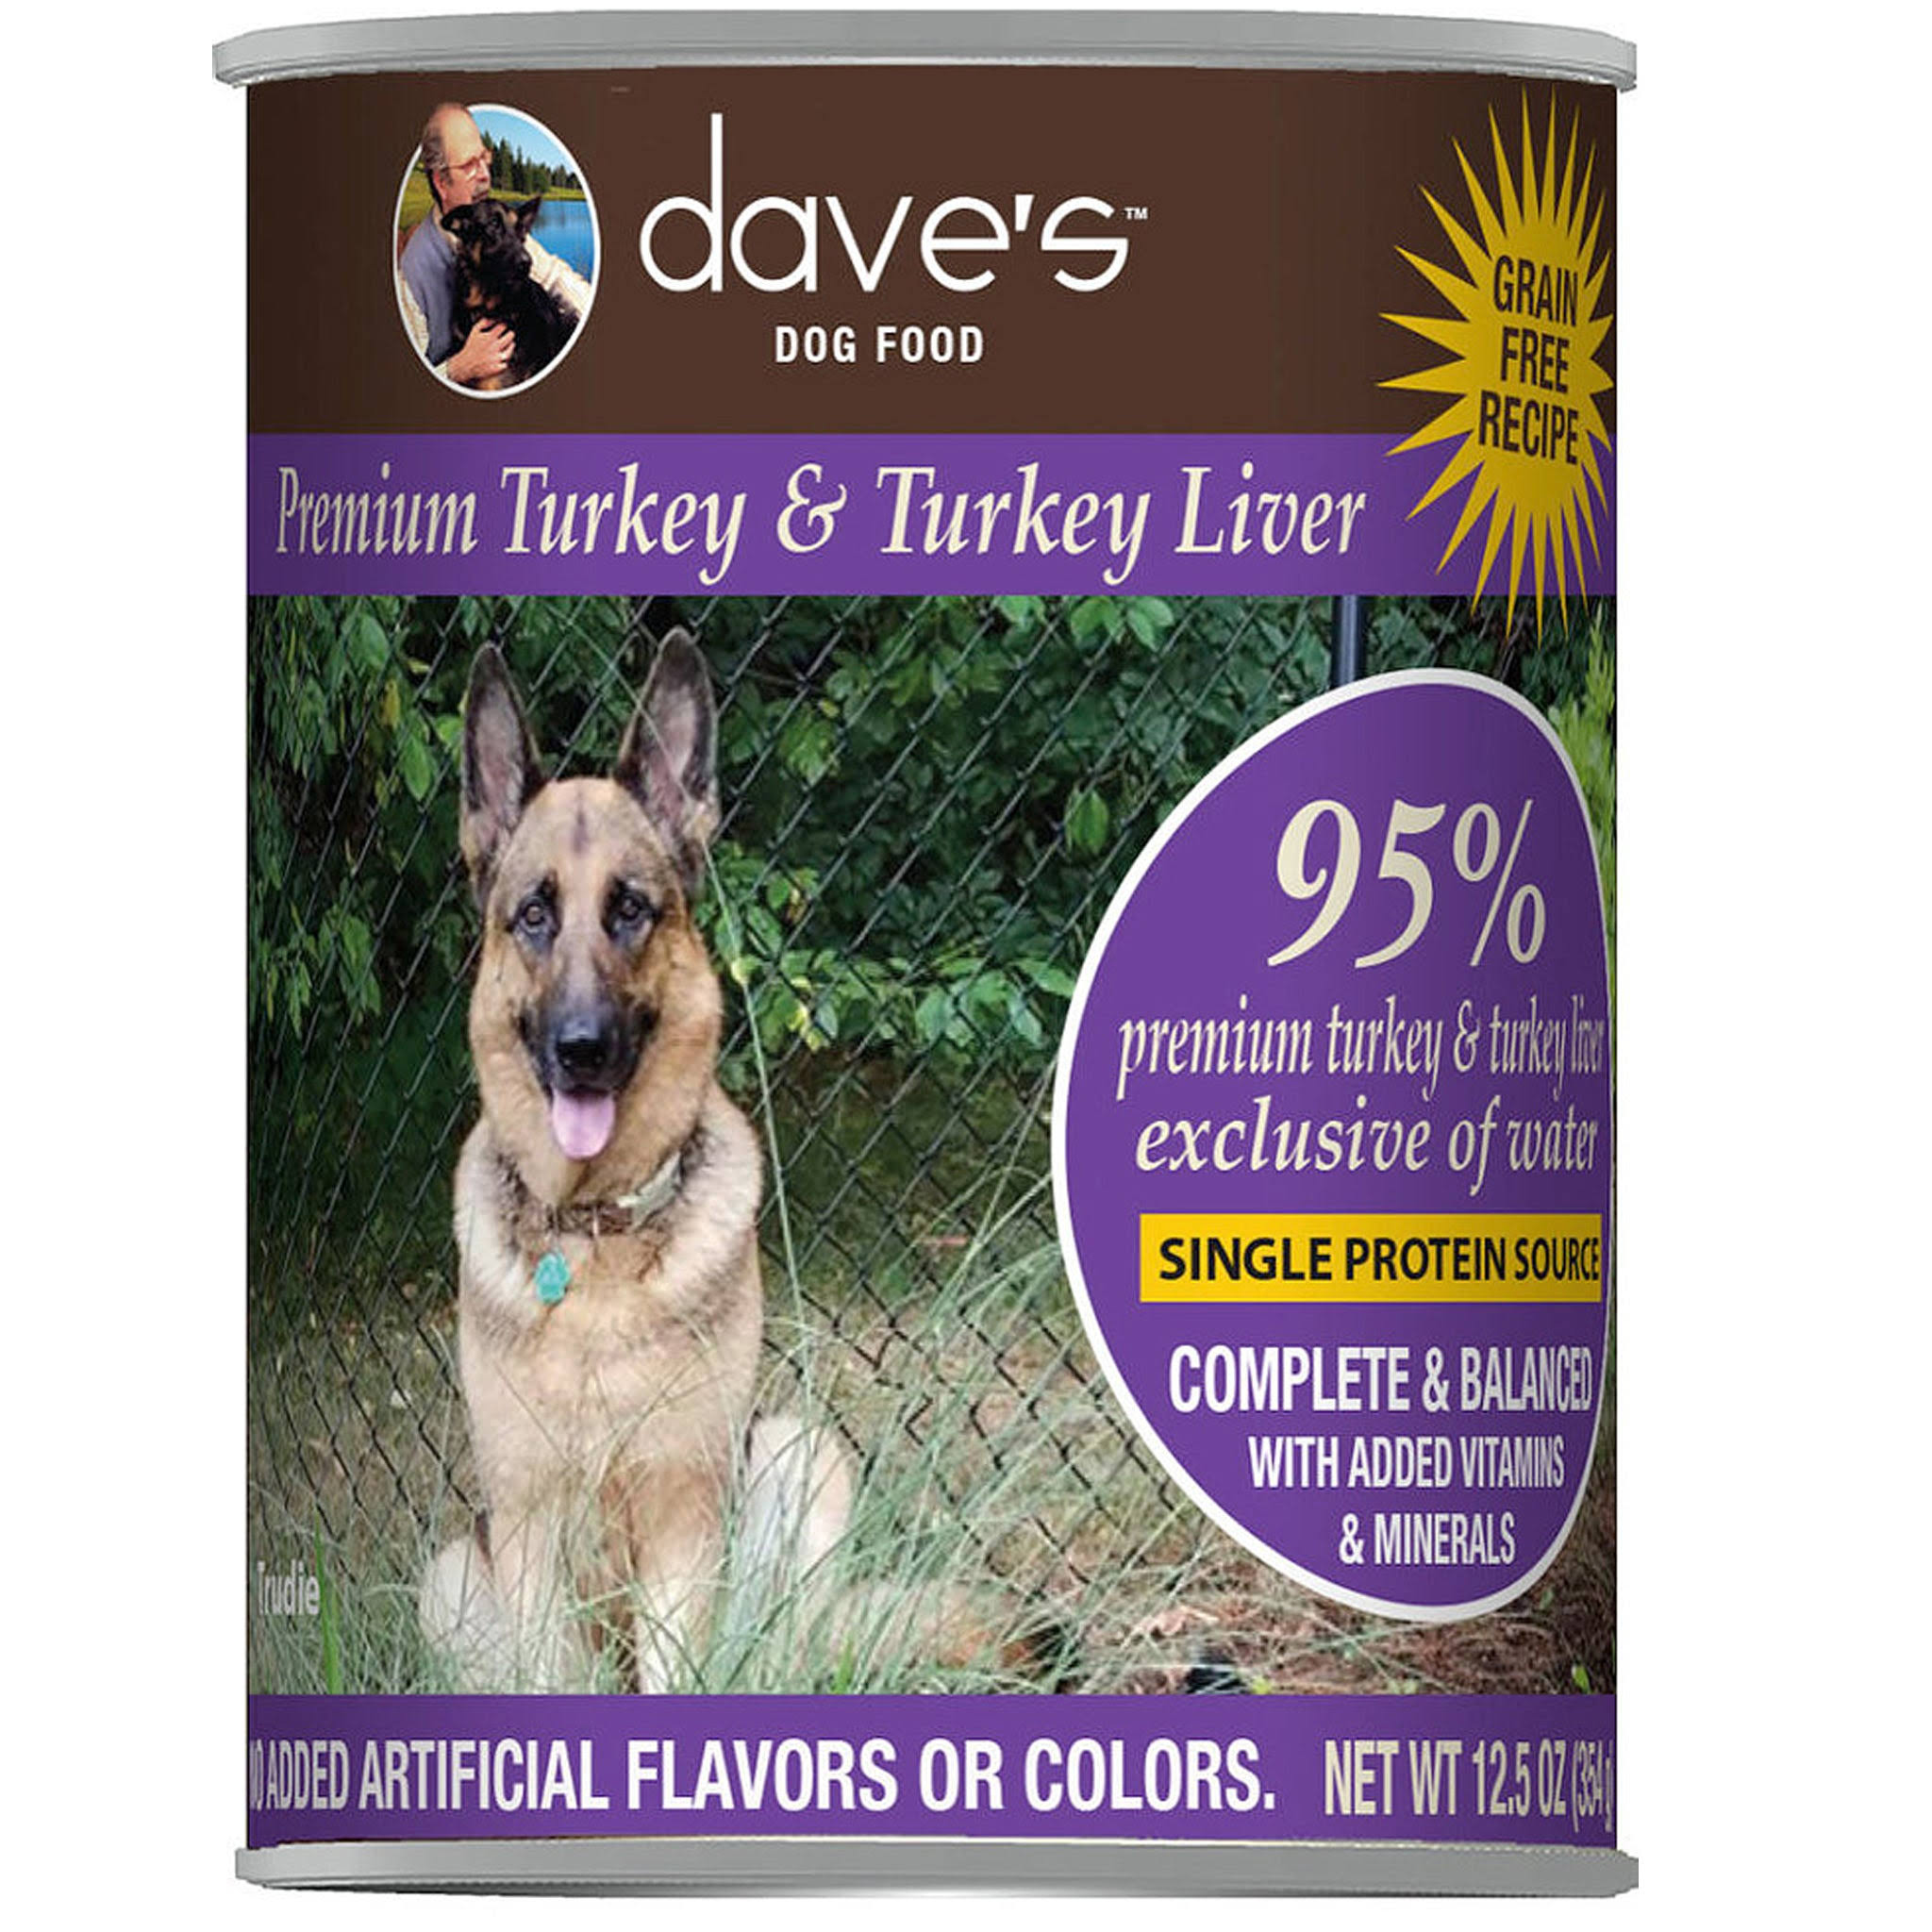 Dave's Premium Turkey & Turkey Liver 95% Meat Canned Dog Food